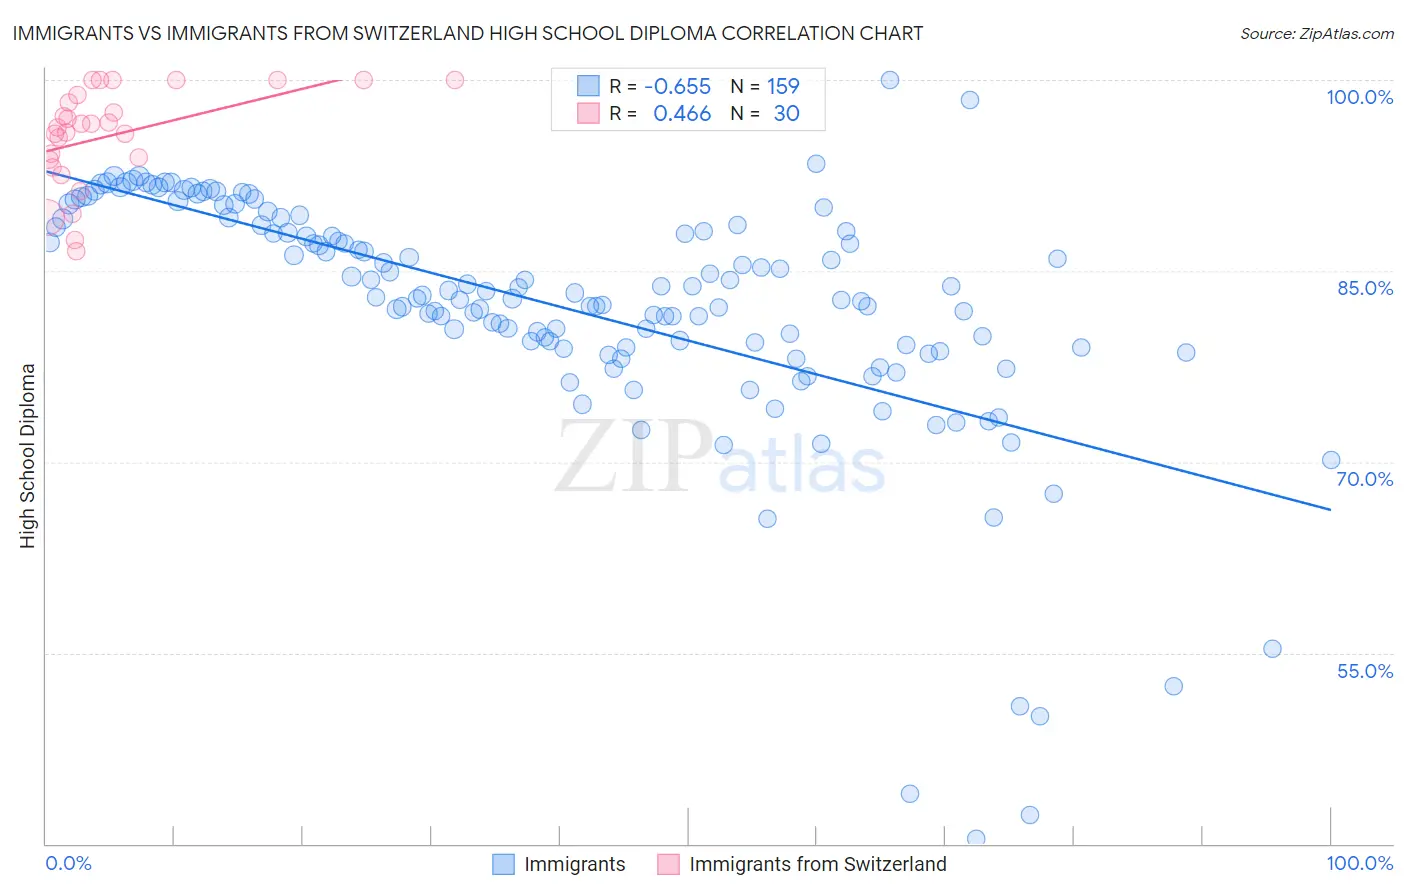 Immigrants vs Immigrants from Switzerland High School Diploma